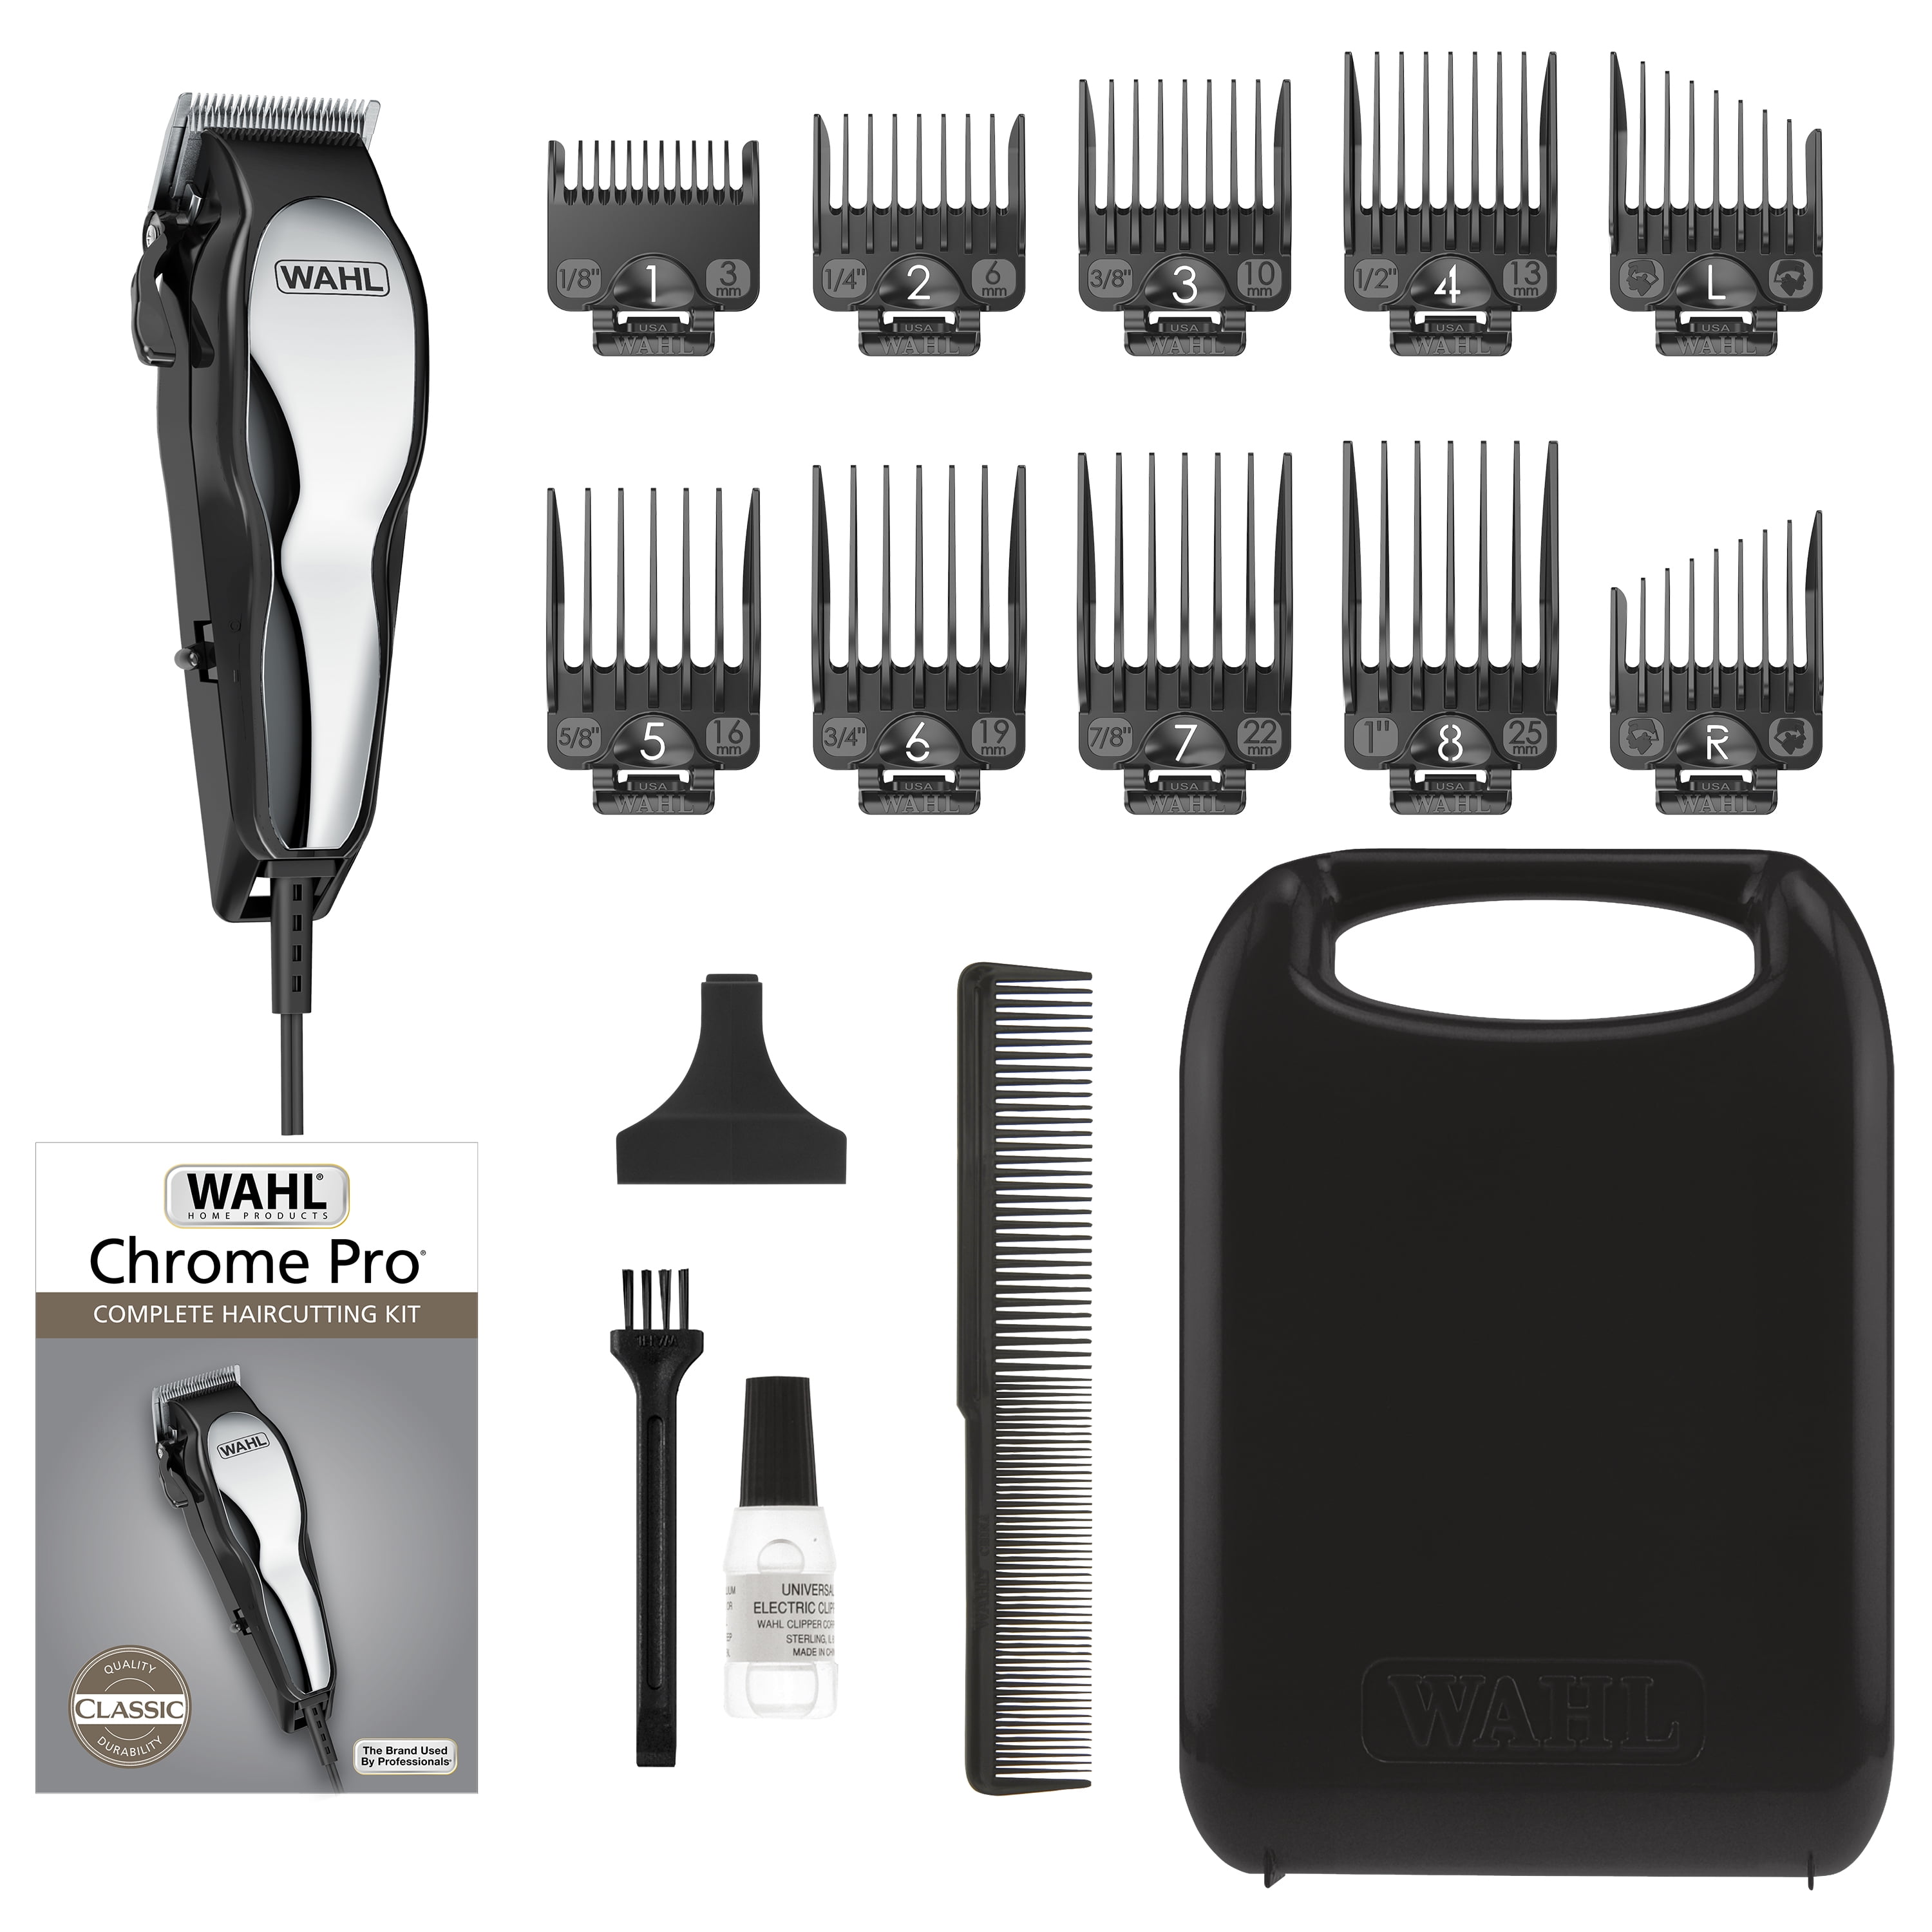 Wahl Chrome pro Haircutting Kit, Black/Chrome -79730T 